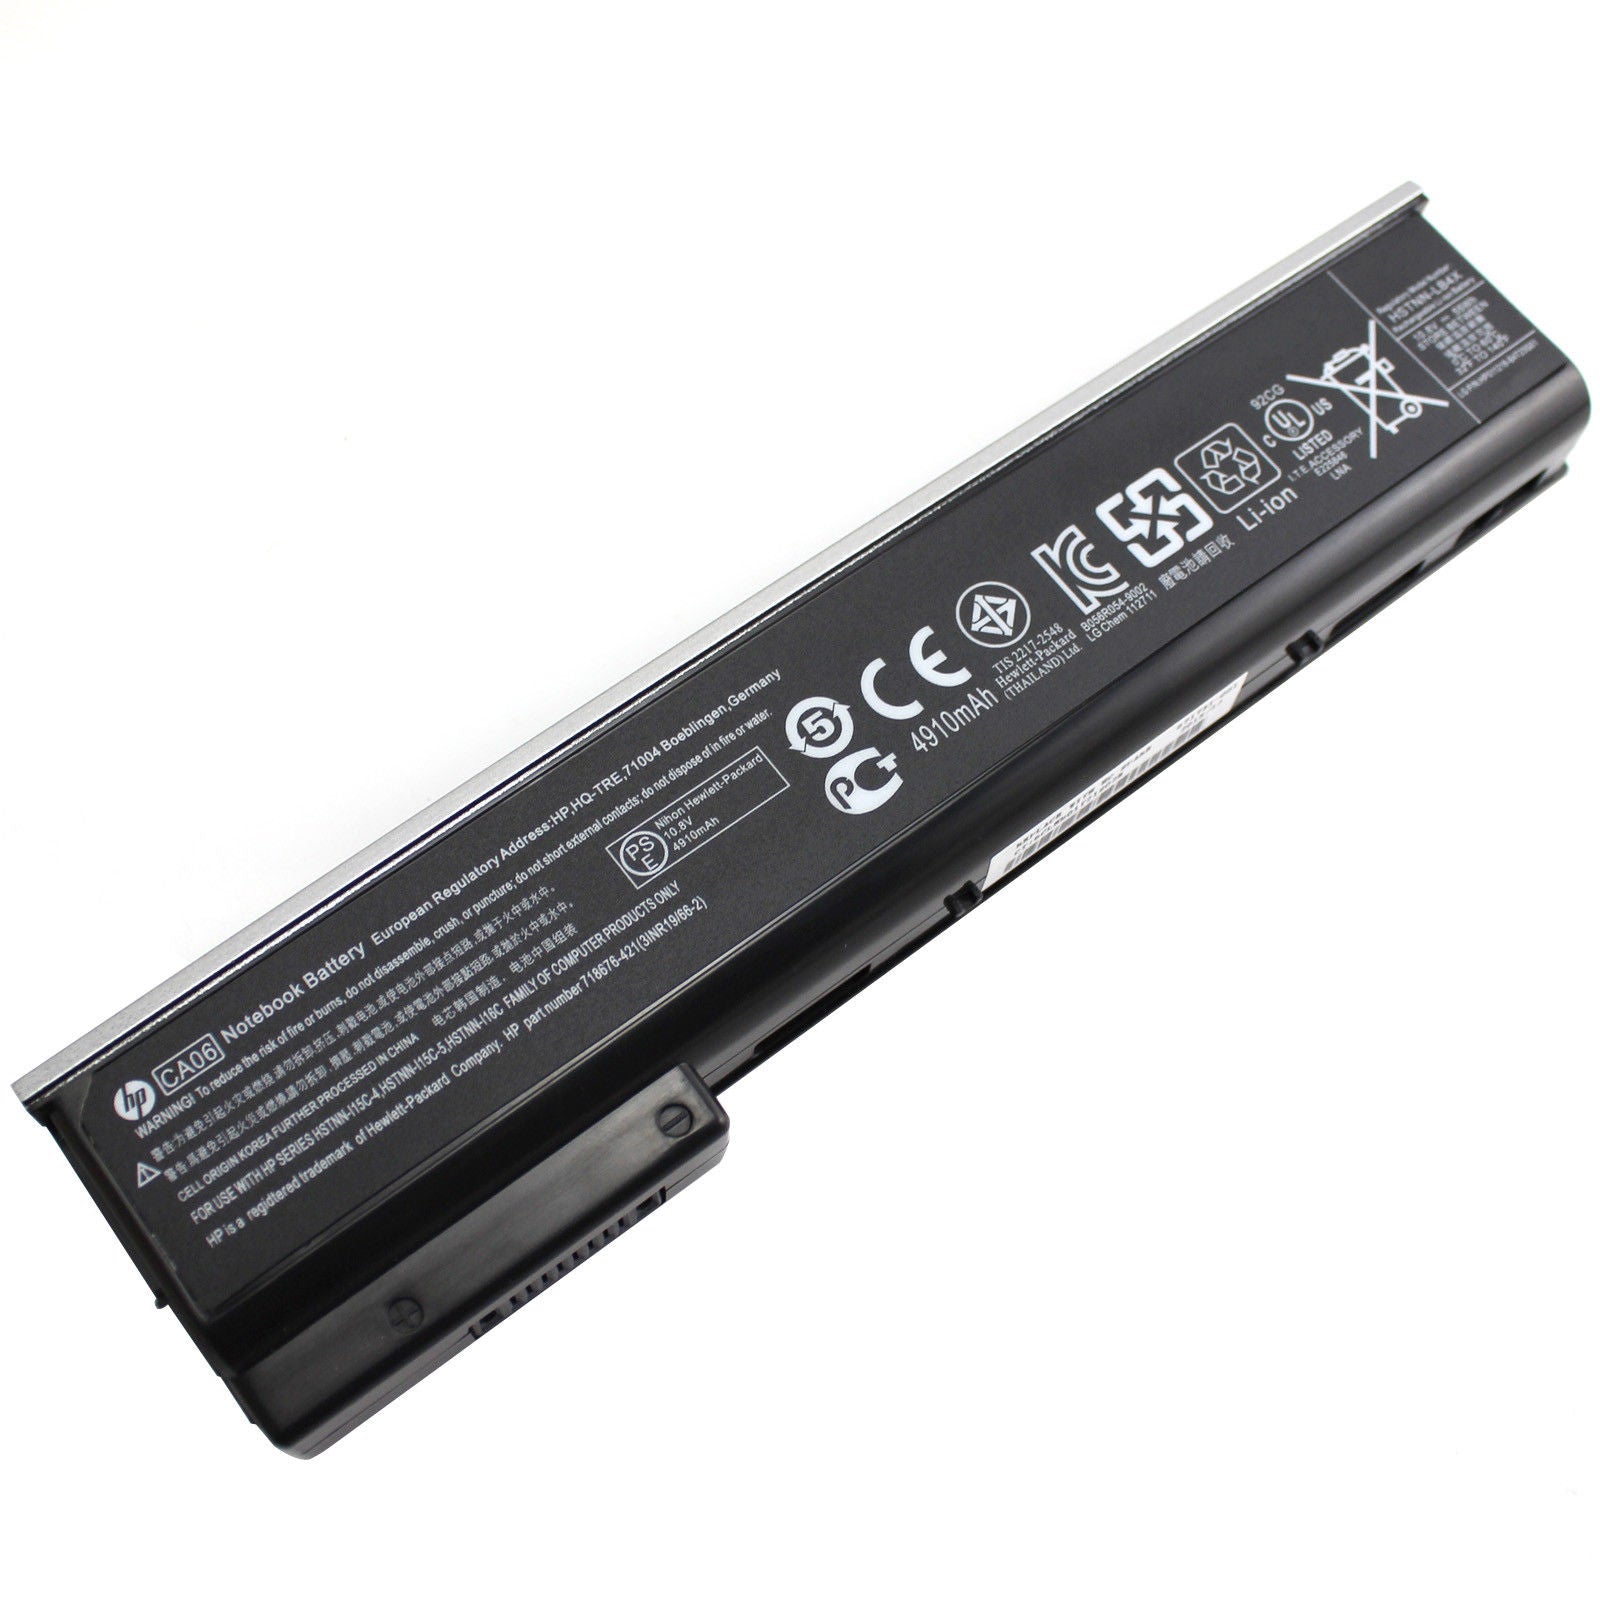 Genuine CA06 CA06XL Battery for HP ProBook 640 645 650 655 G0 G1 718755 001